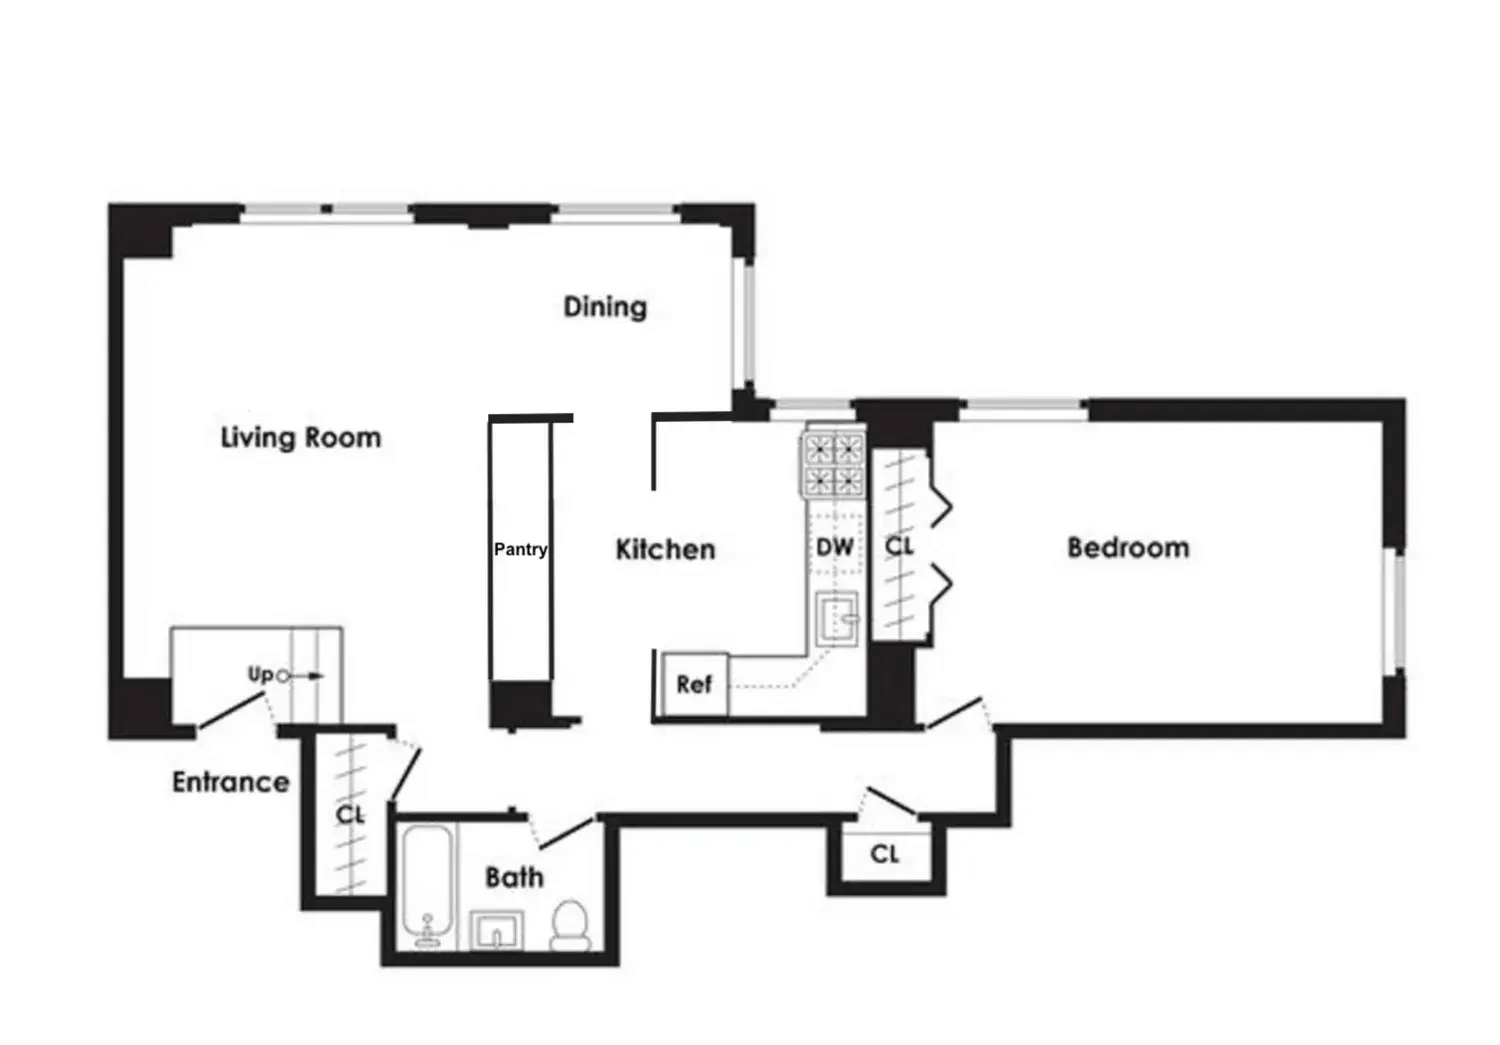 floorplan of unit 1b at 345 clinton avenue